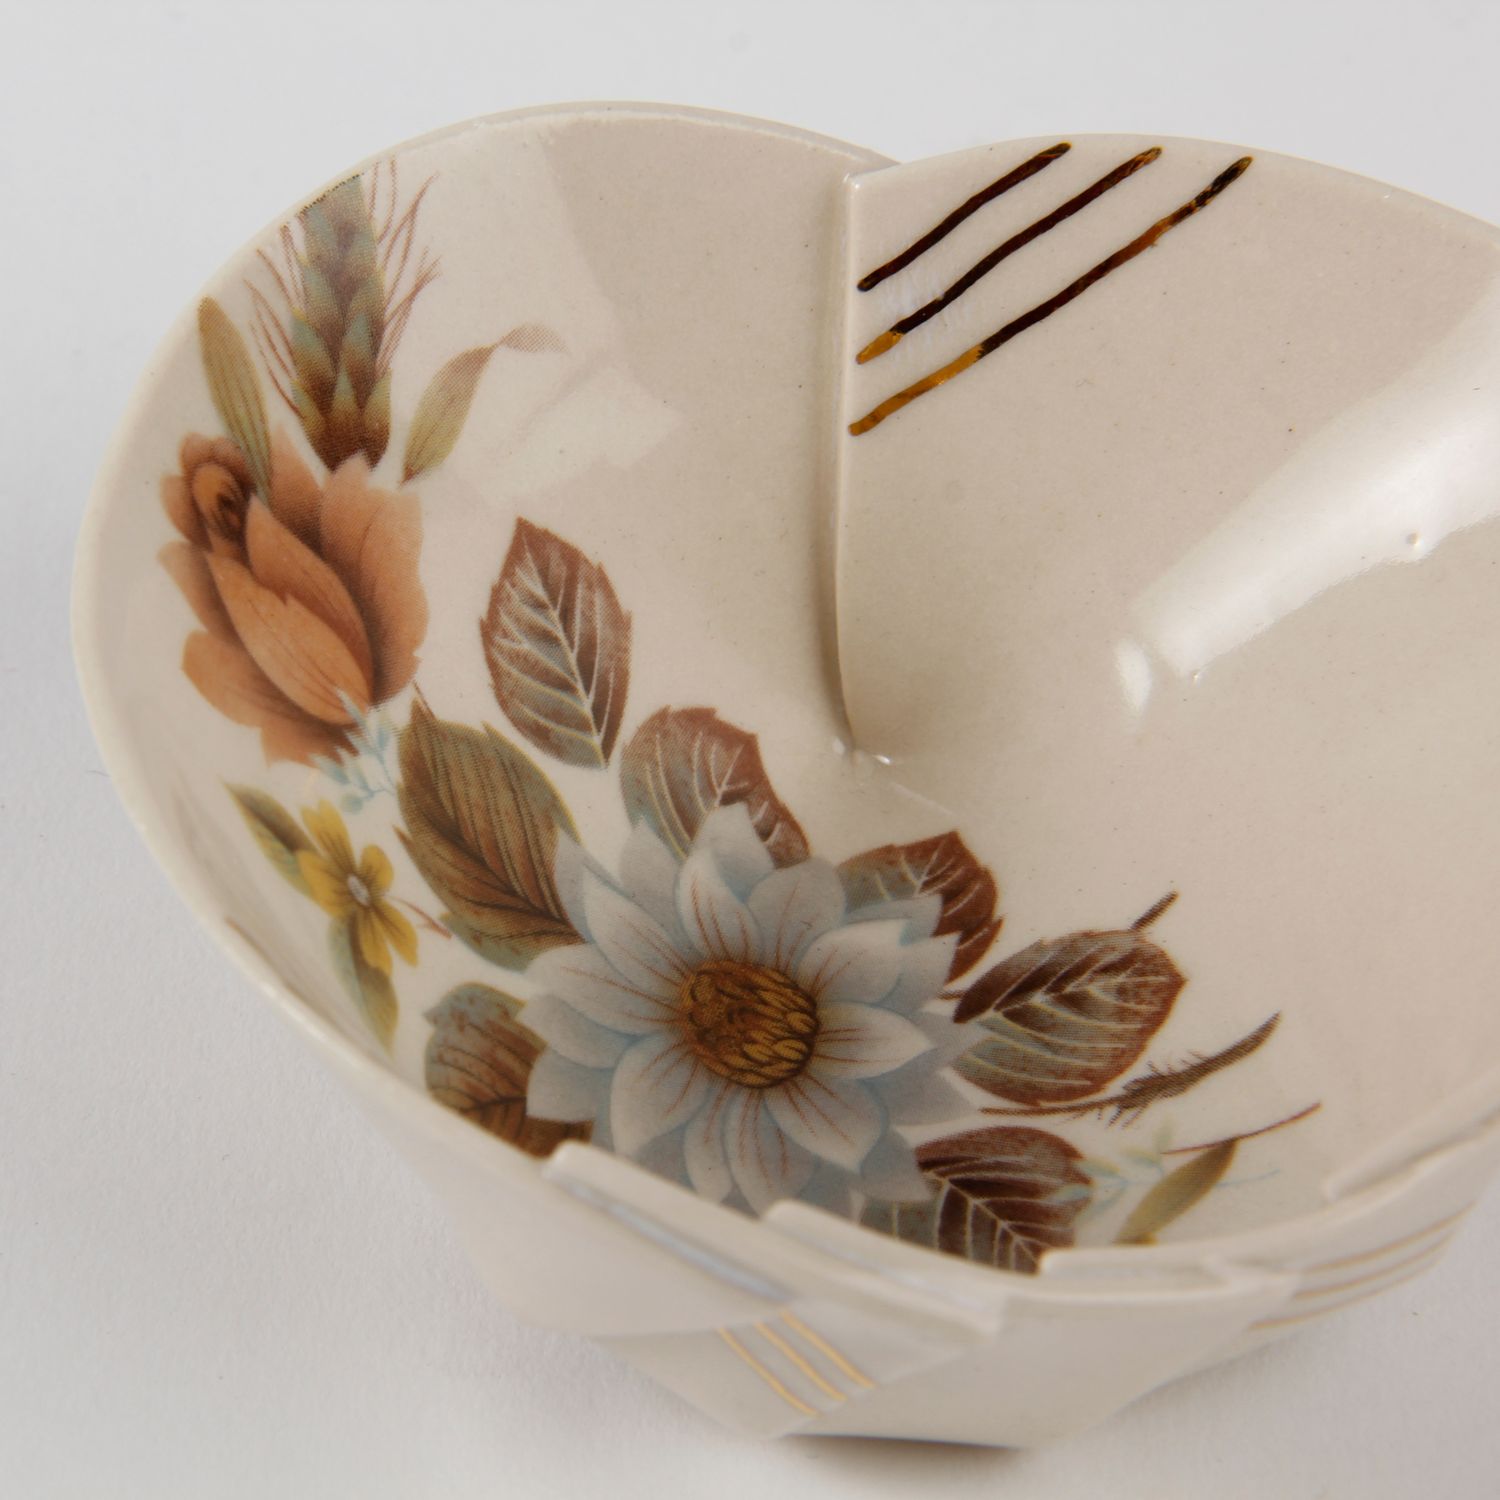 Natalie Waddell: Medium Floral Bowl Product Image 4 of 4